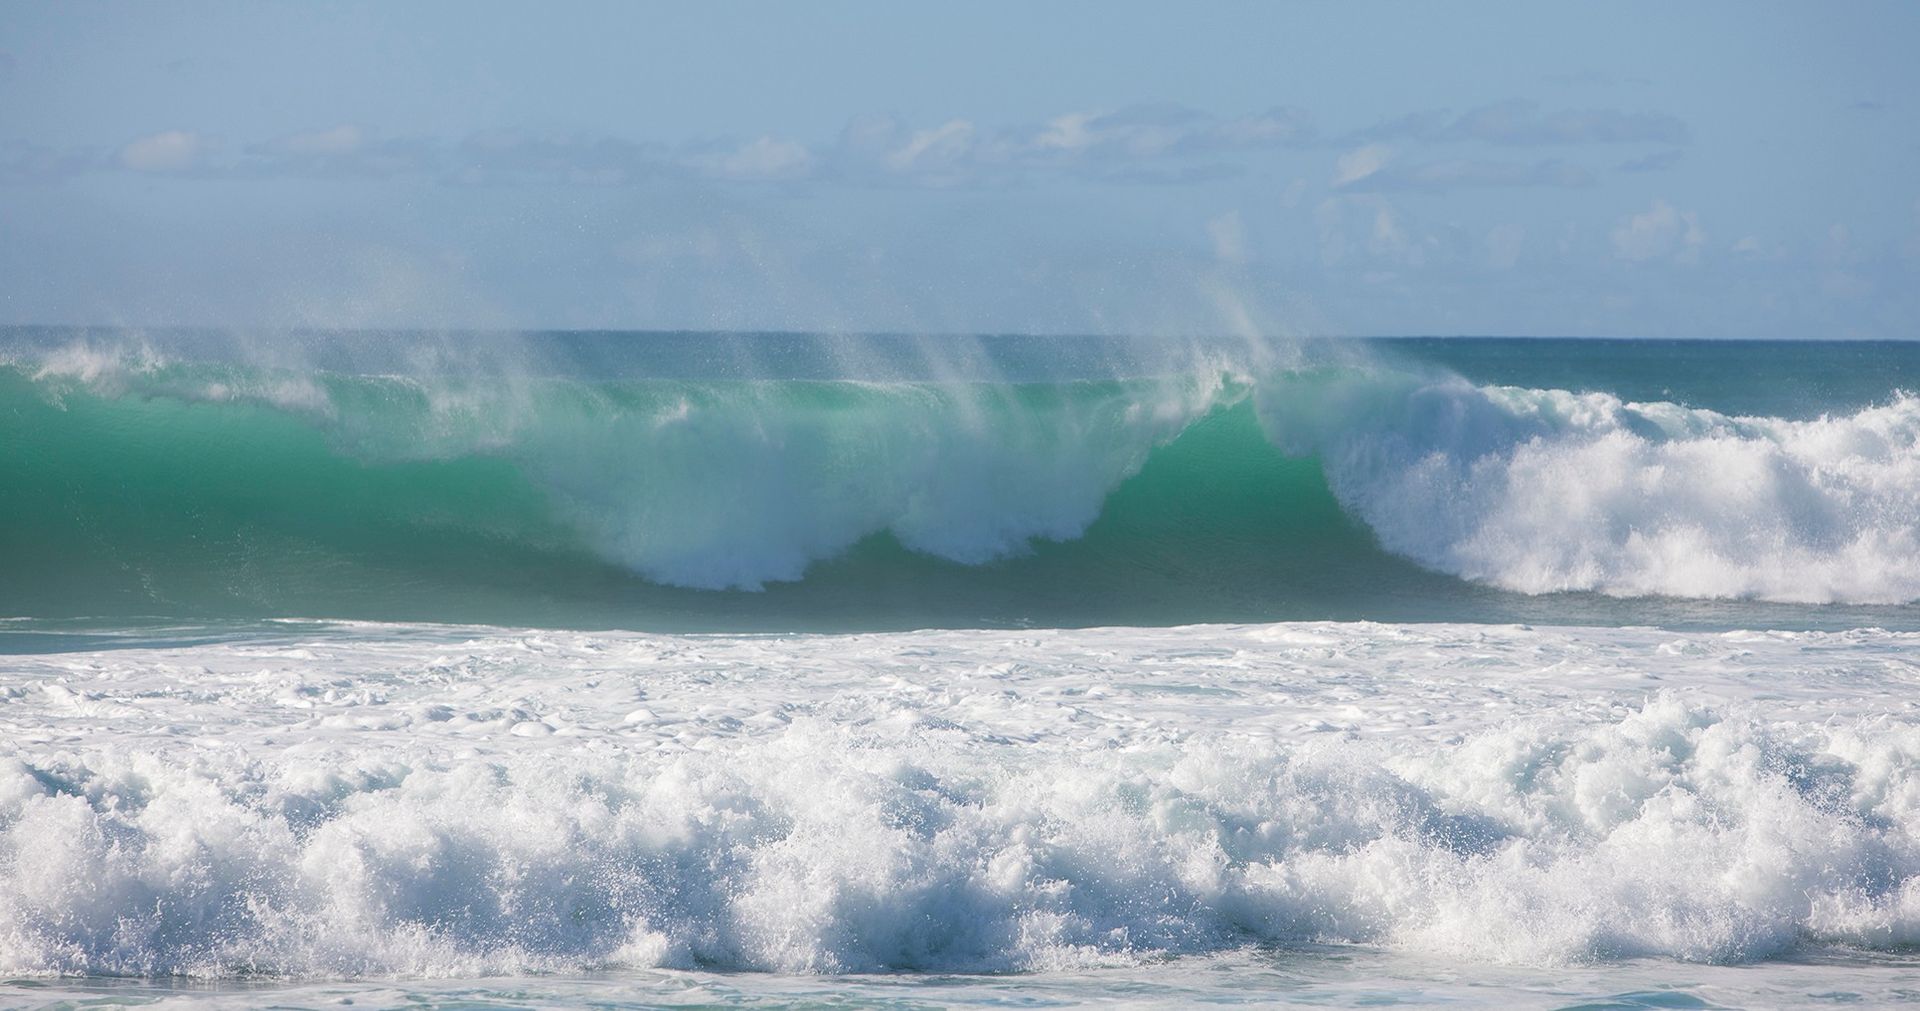 Daytime photo of waves crashing on a beach.